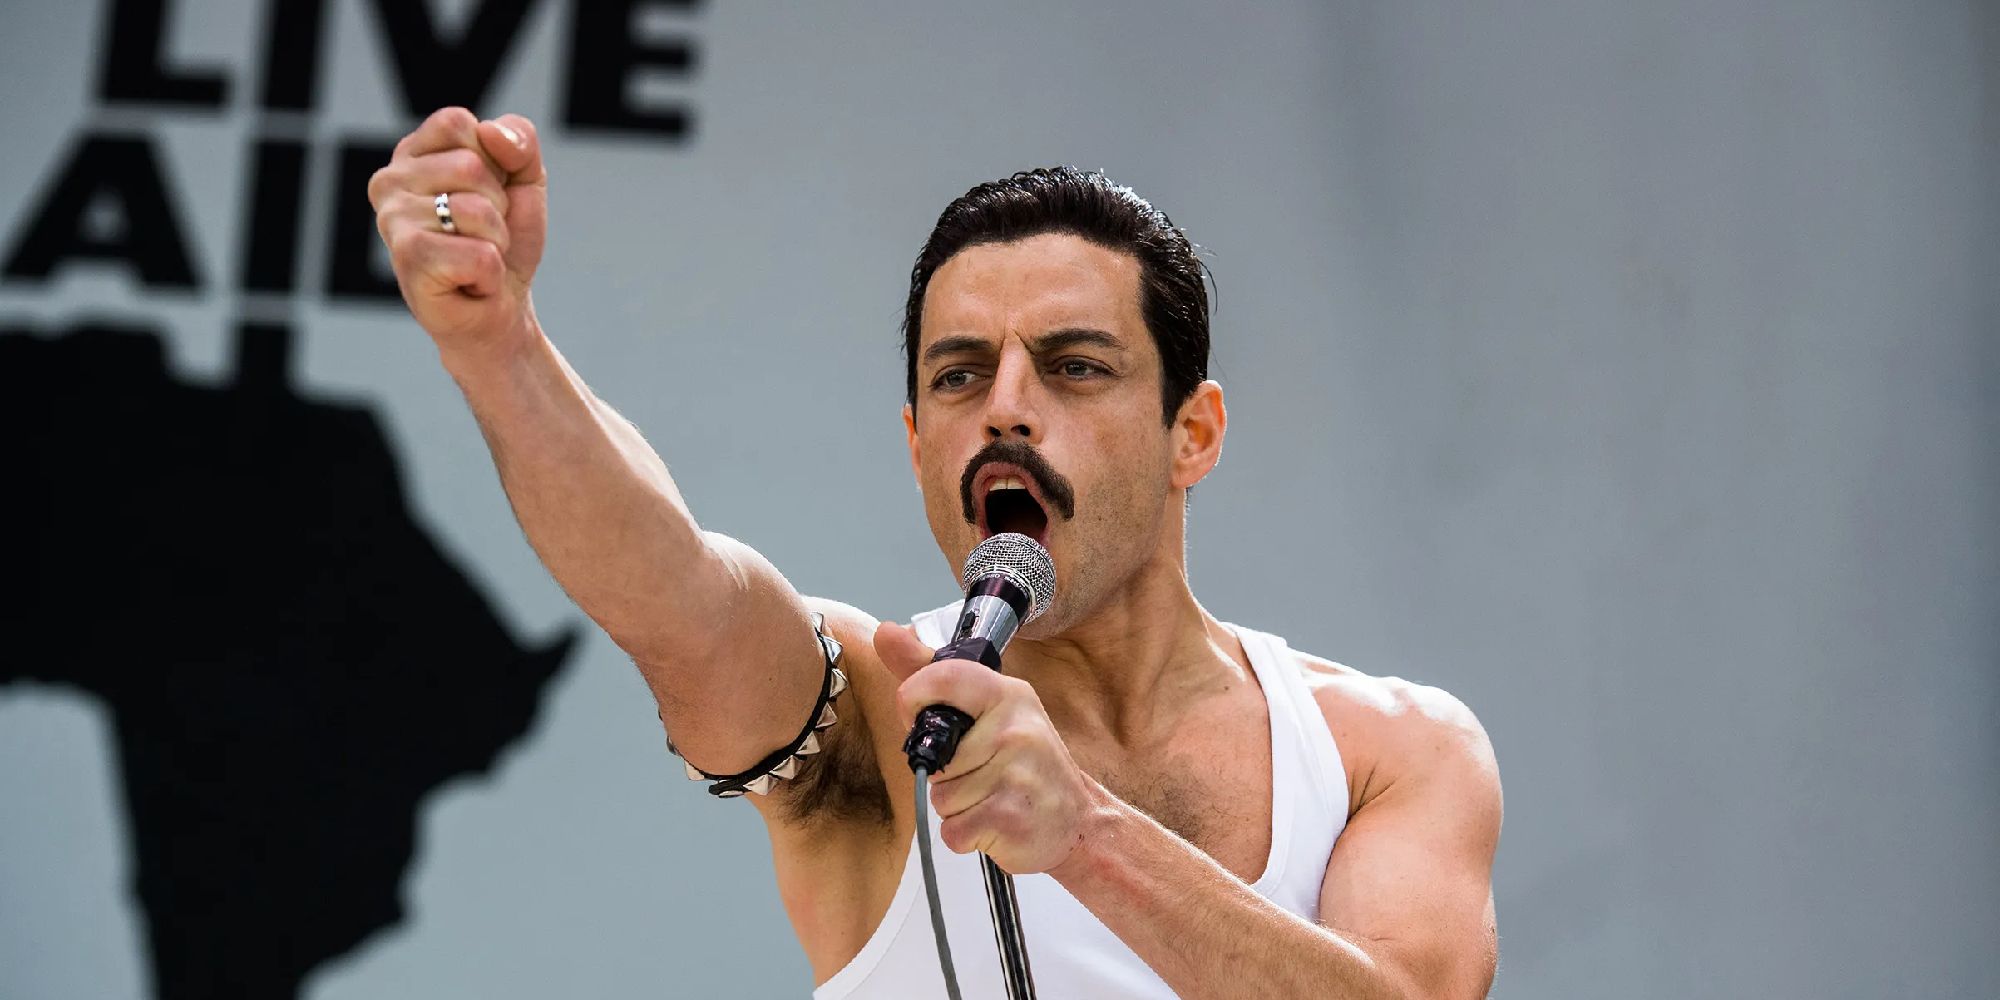 Rami Malek as Freddy Mercury singing live in Bohemian Rhapsody.